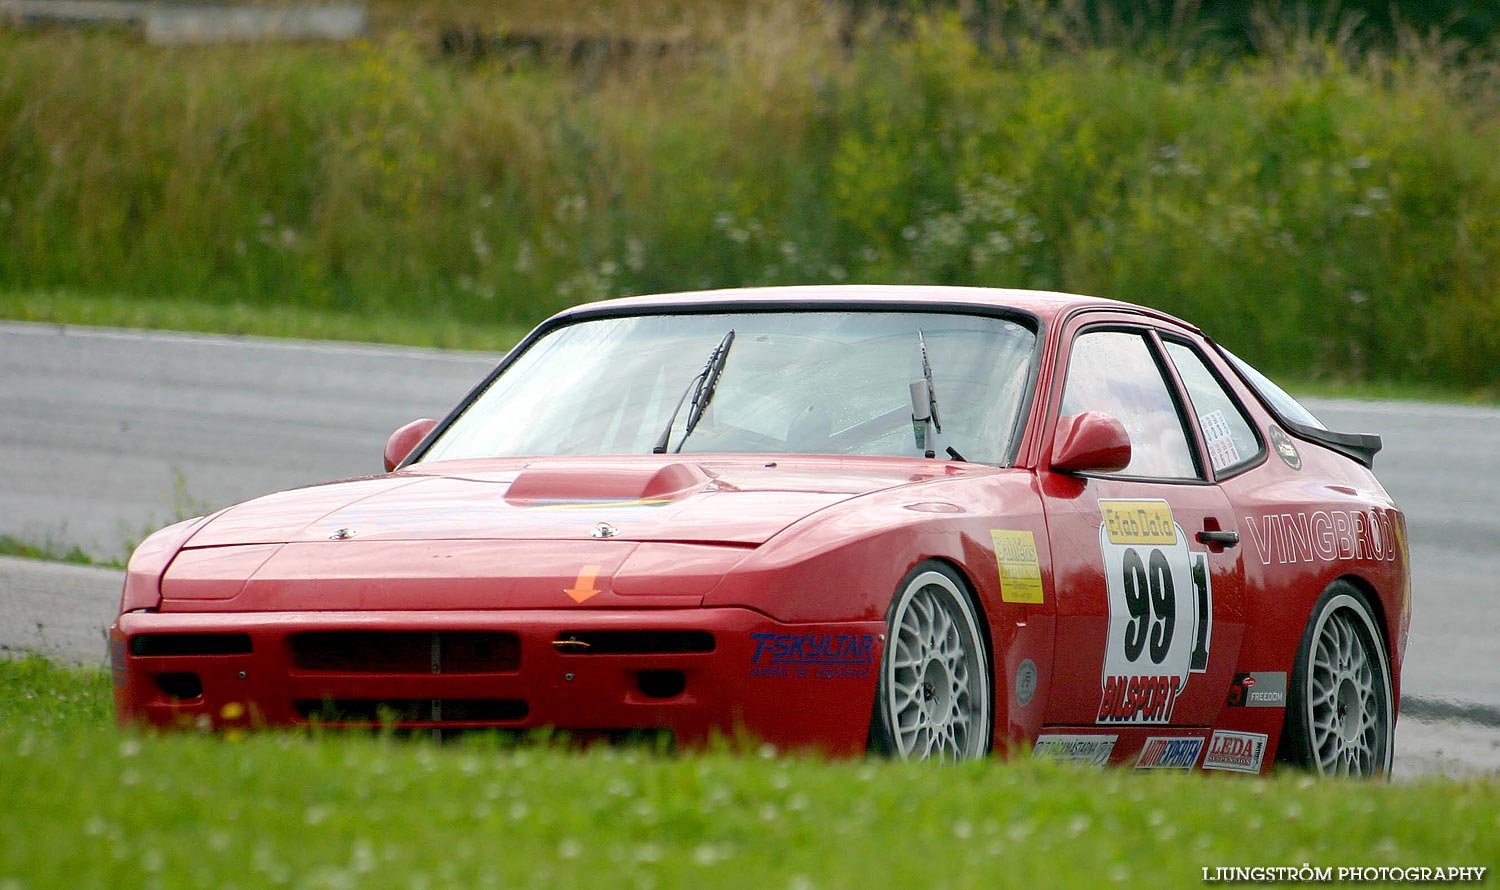 SSK Raceweek,mix,Kinnekulle Ring,Götene,Sverige,Motorsport,,2004,92414